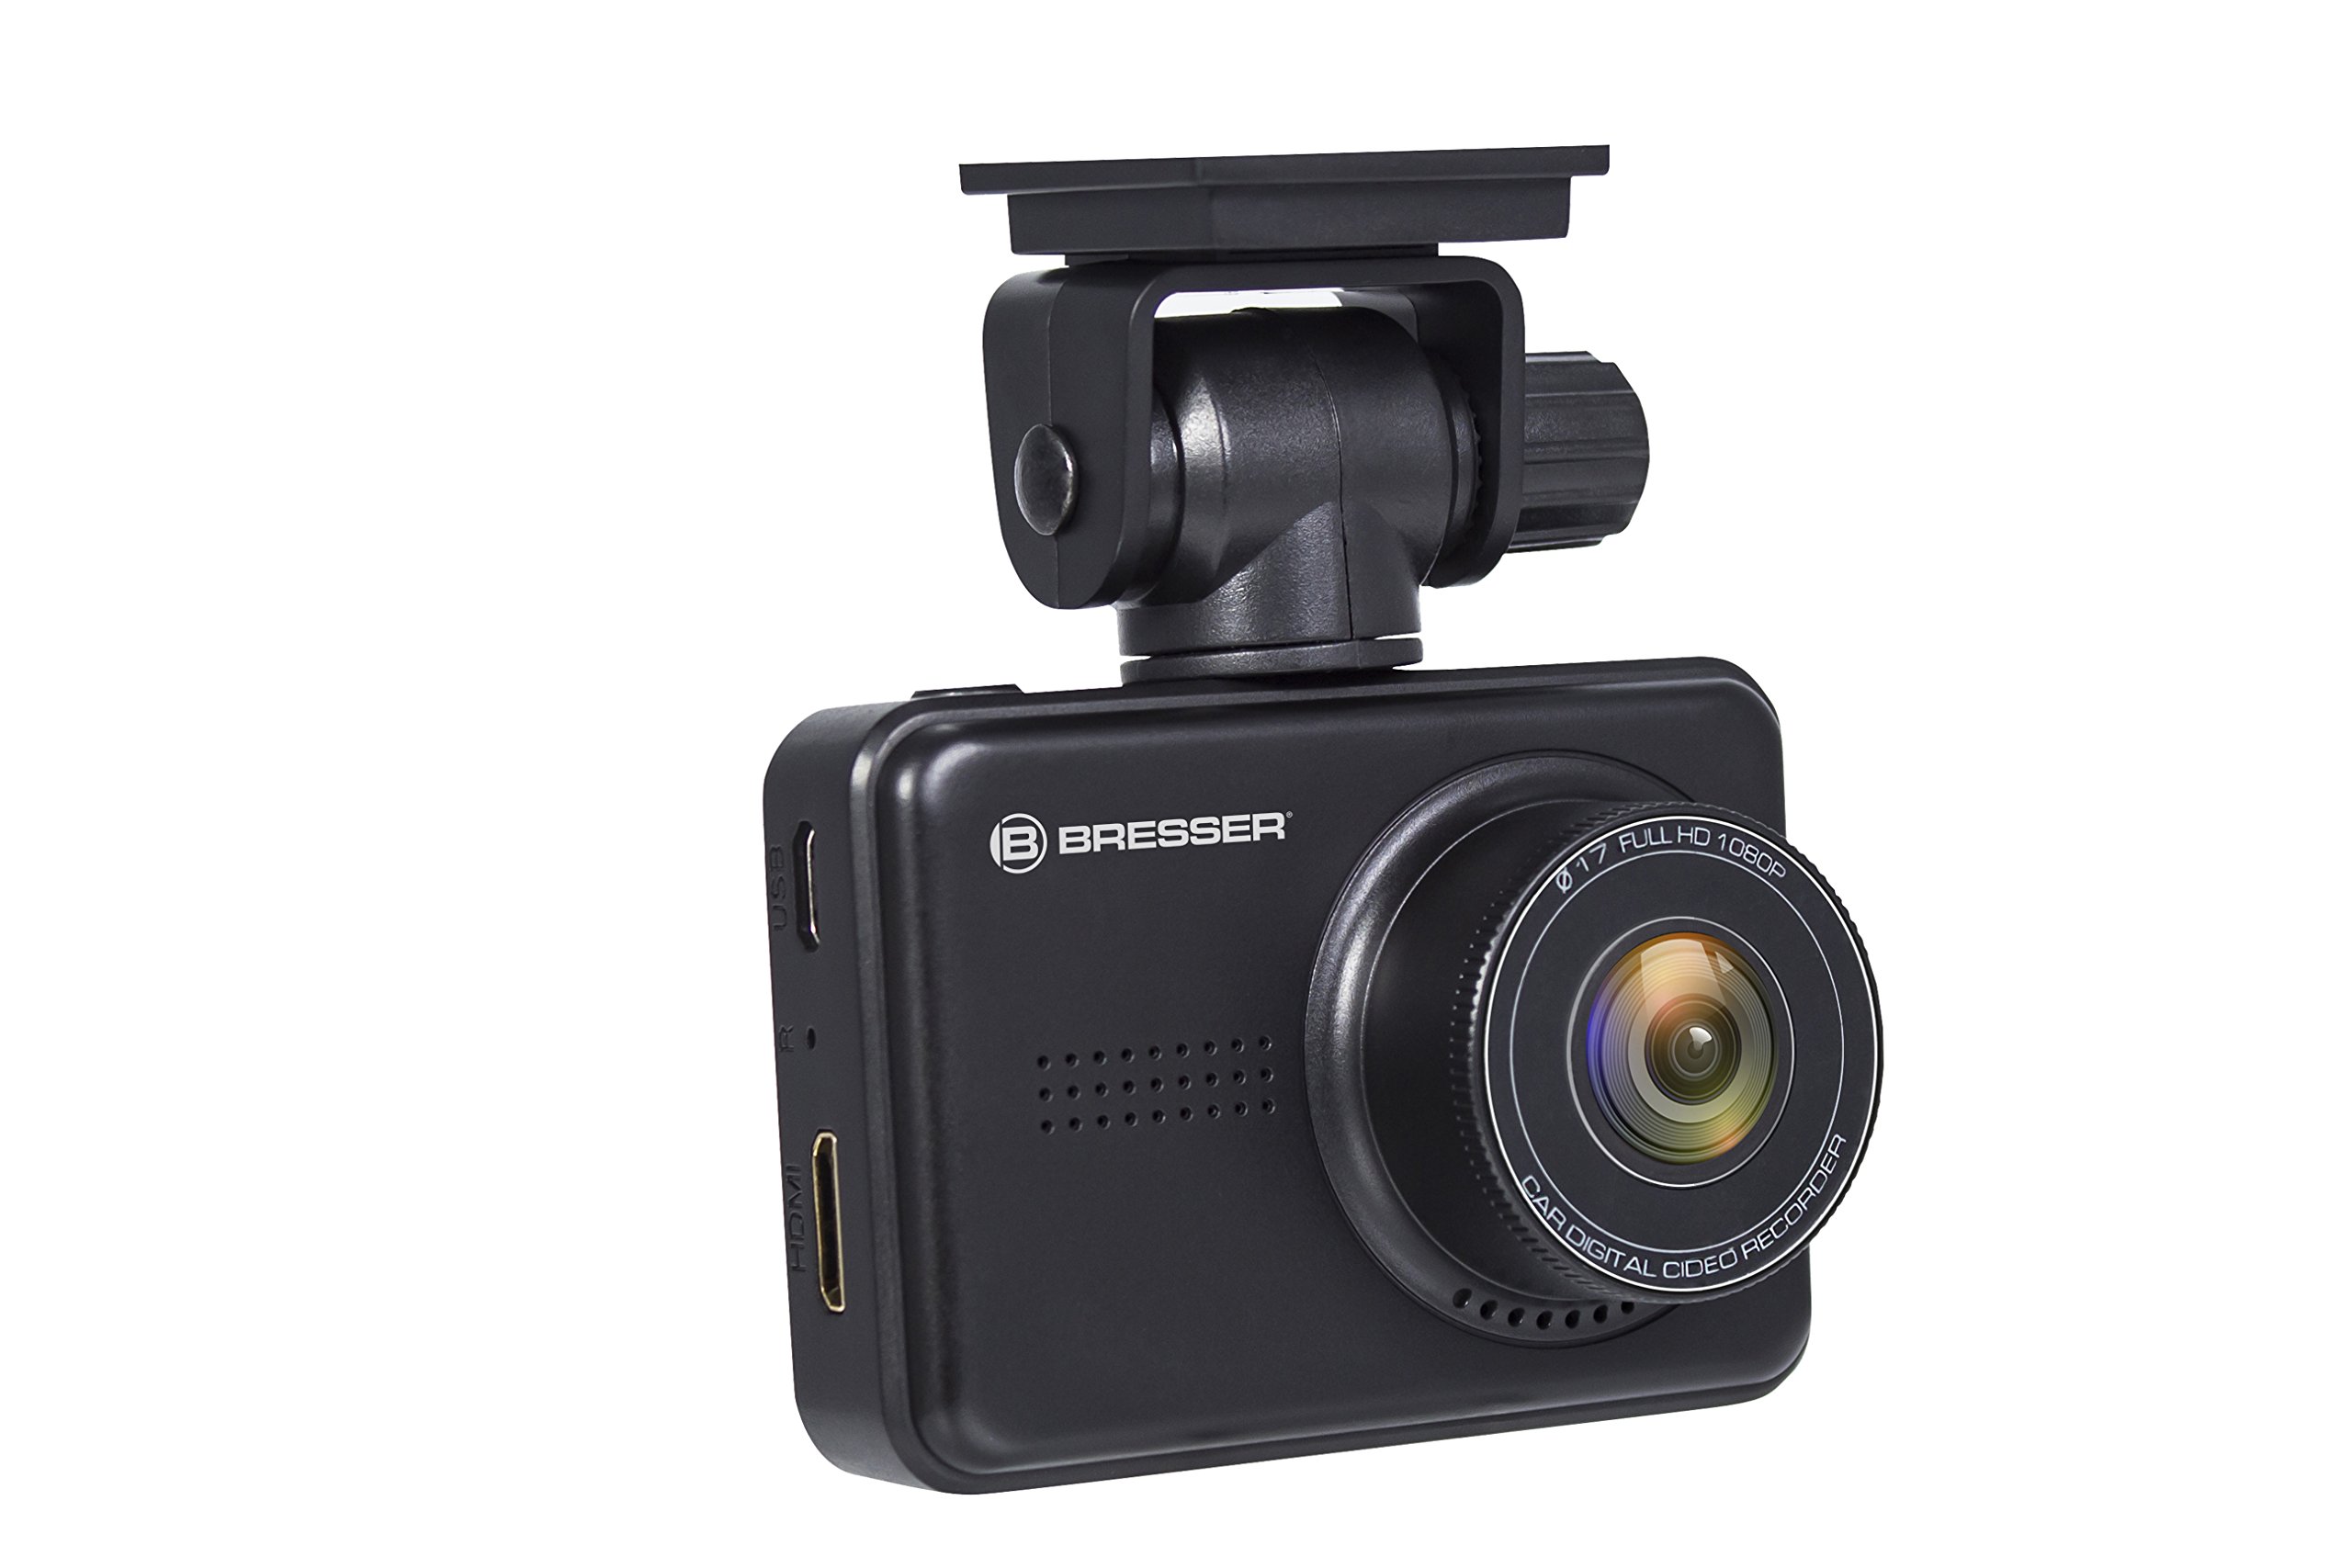 Bresser 9686100 Full HD Dashboard Kamera Autokamera Dashcam 3MP mit Tag-/Nacht Modus, 140 Grad, G-Sensor